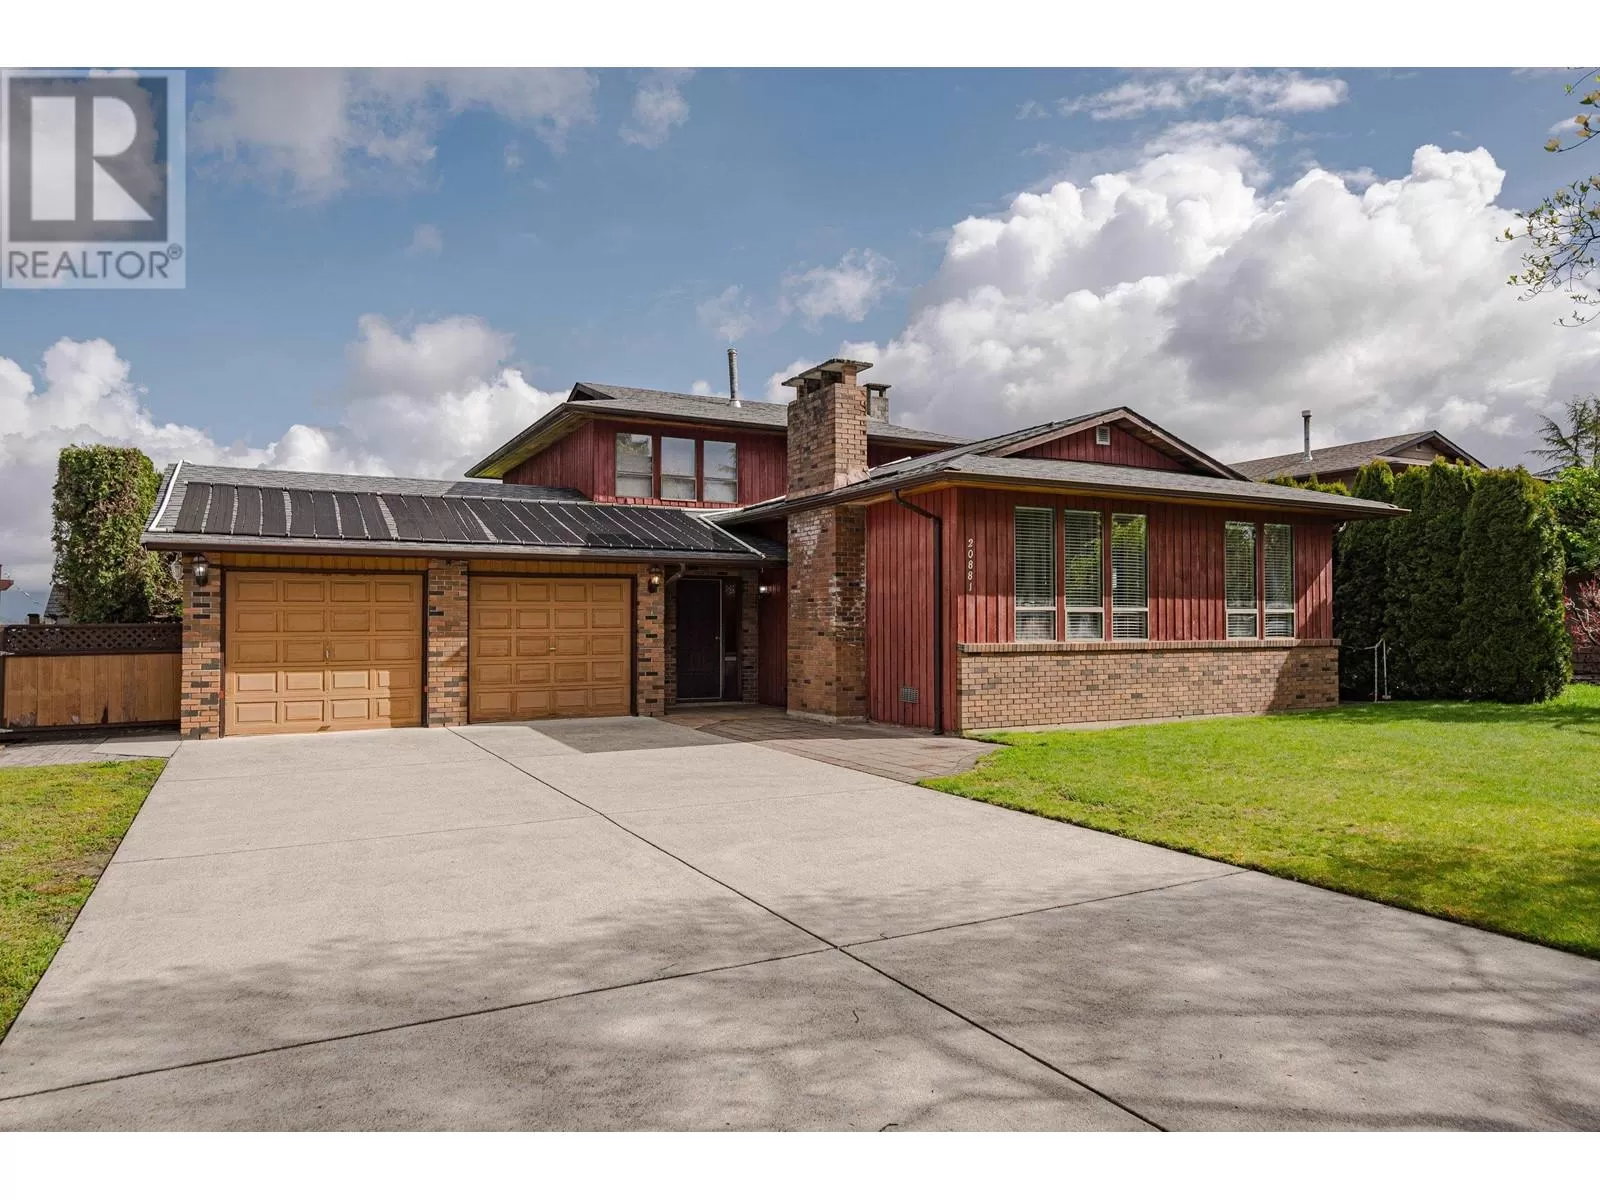 House for rent: 20881 125 Avenue, Maple Ridge, British Columbia V4R 2M6